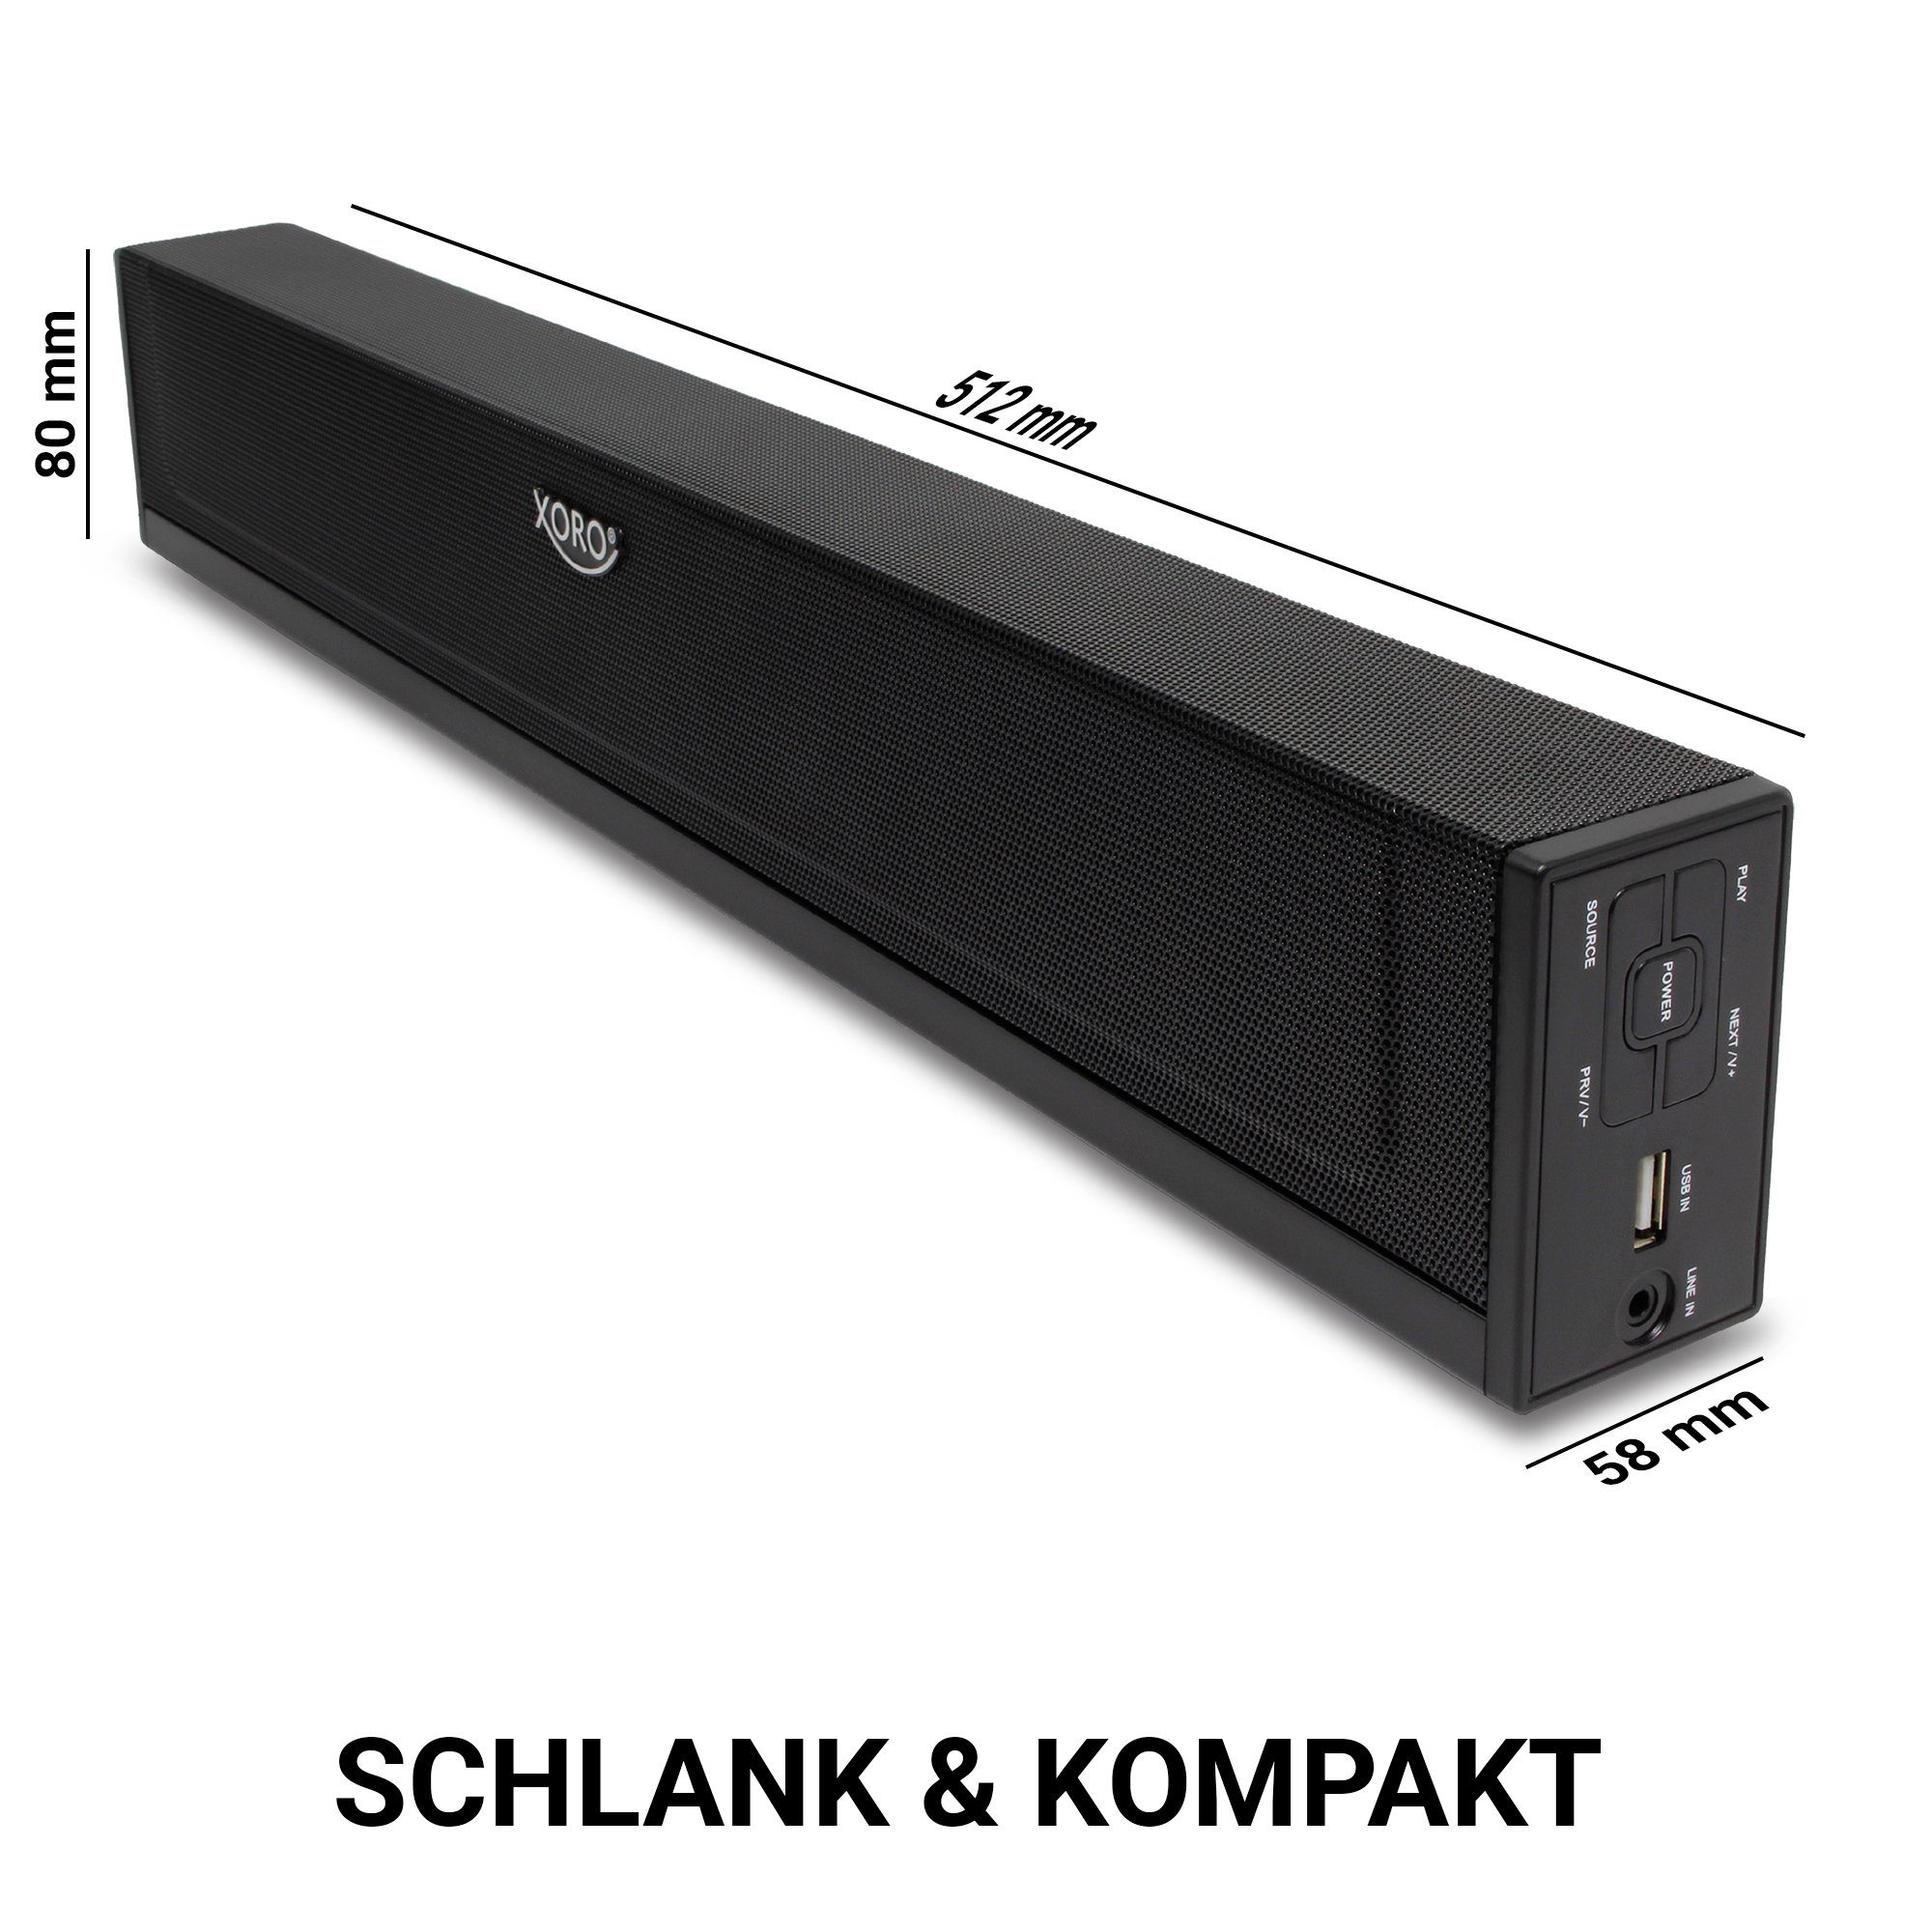 Soundbar Schnittstelle Speaker USB MP3 HSB50 Xoro fähige Bluetooth Xoro Soundbar V2